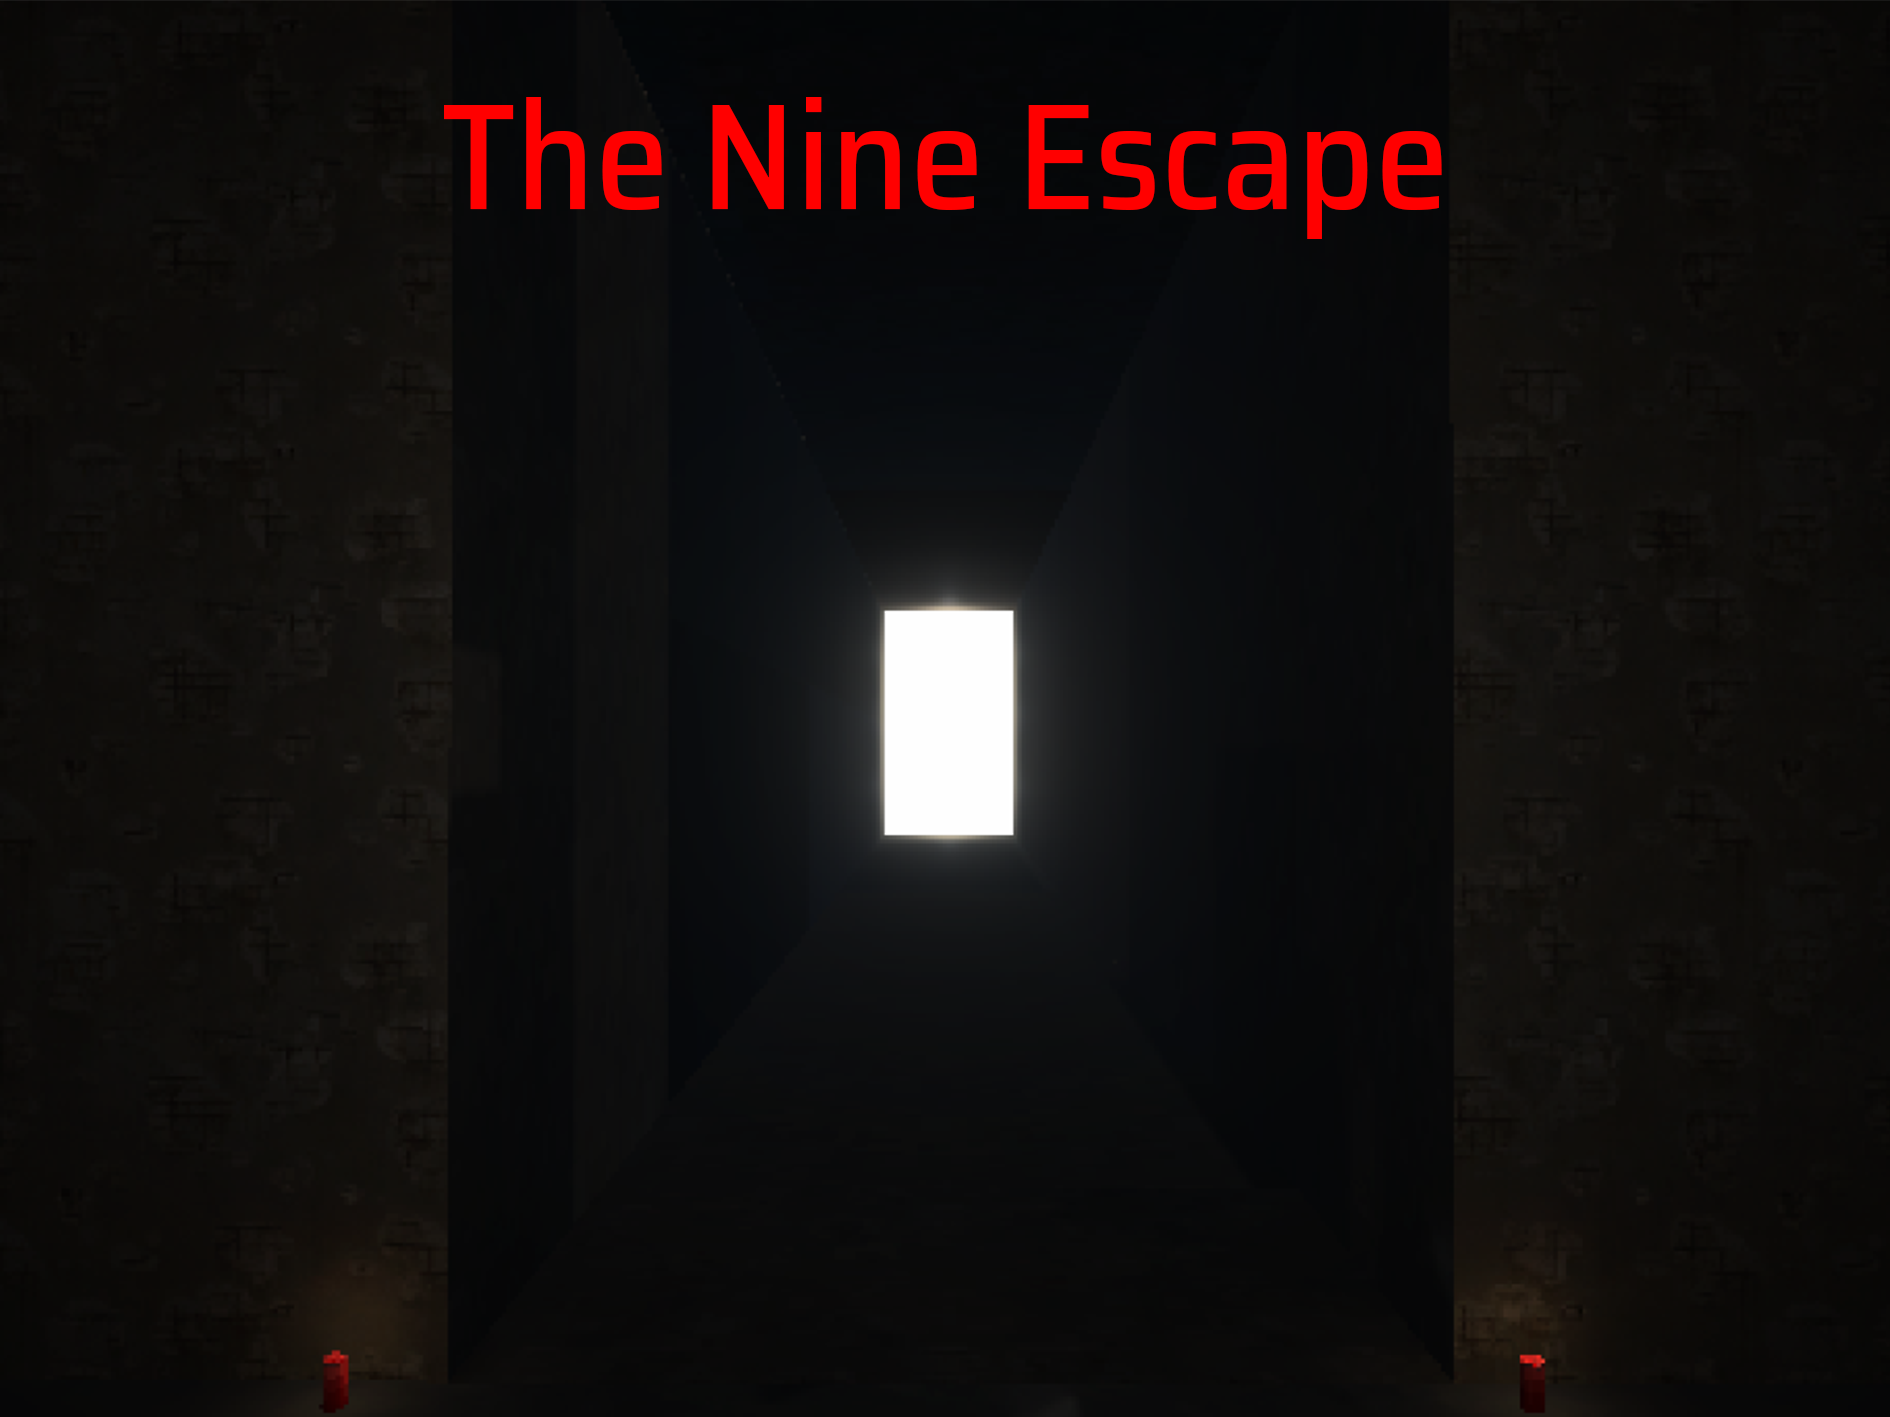 The Nine Escapes